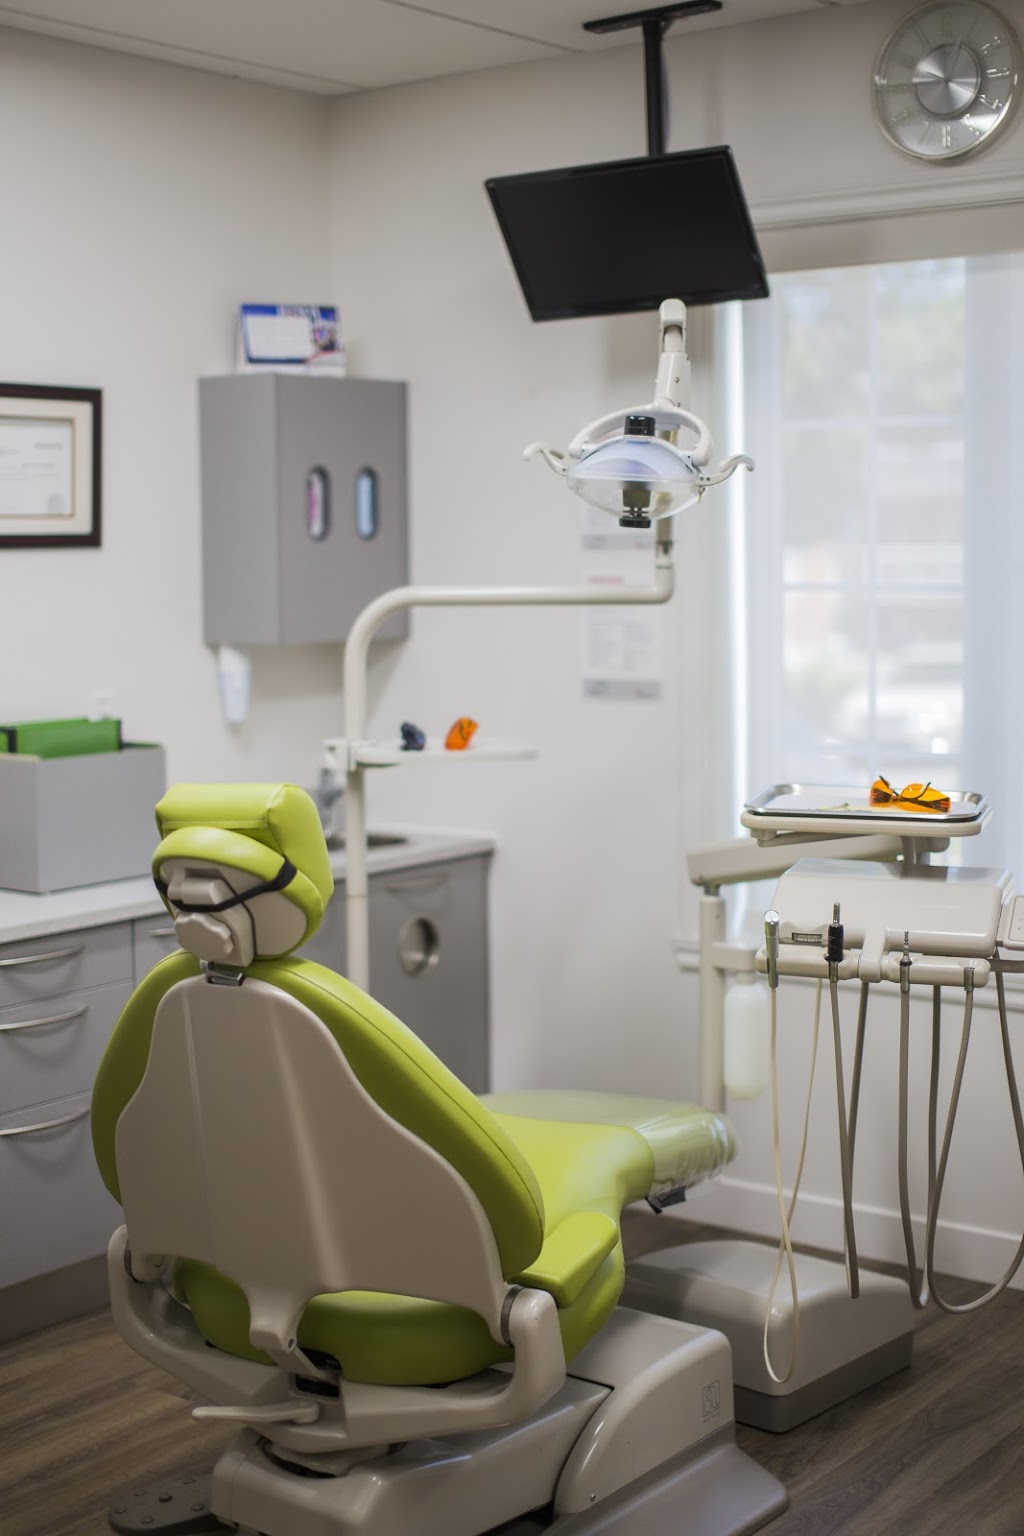 Dental Clinic France Gascon | dentist | 4999 Boulevard Saint-Charles #101, Sainte-Geneviève, QC H9H 3M8, Canada | 5146207084 OR +1 514-620-7084